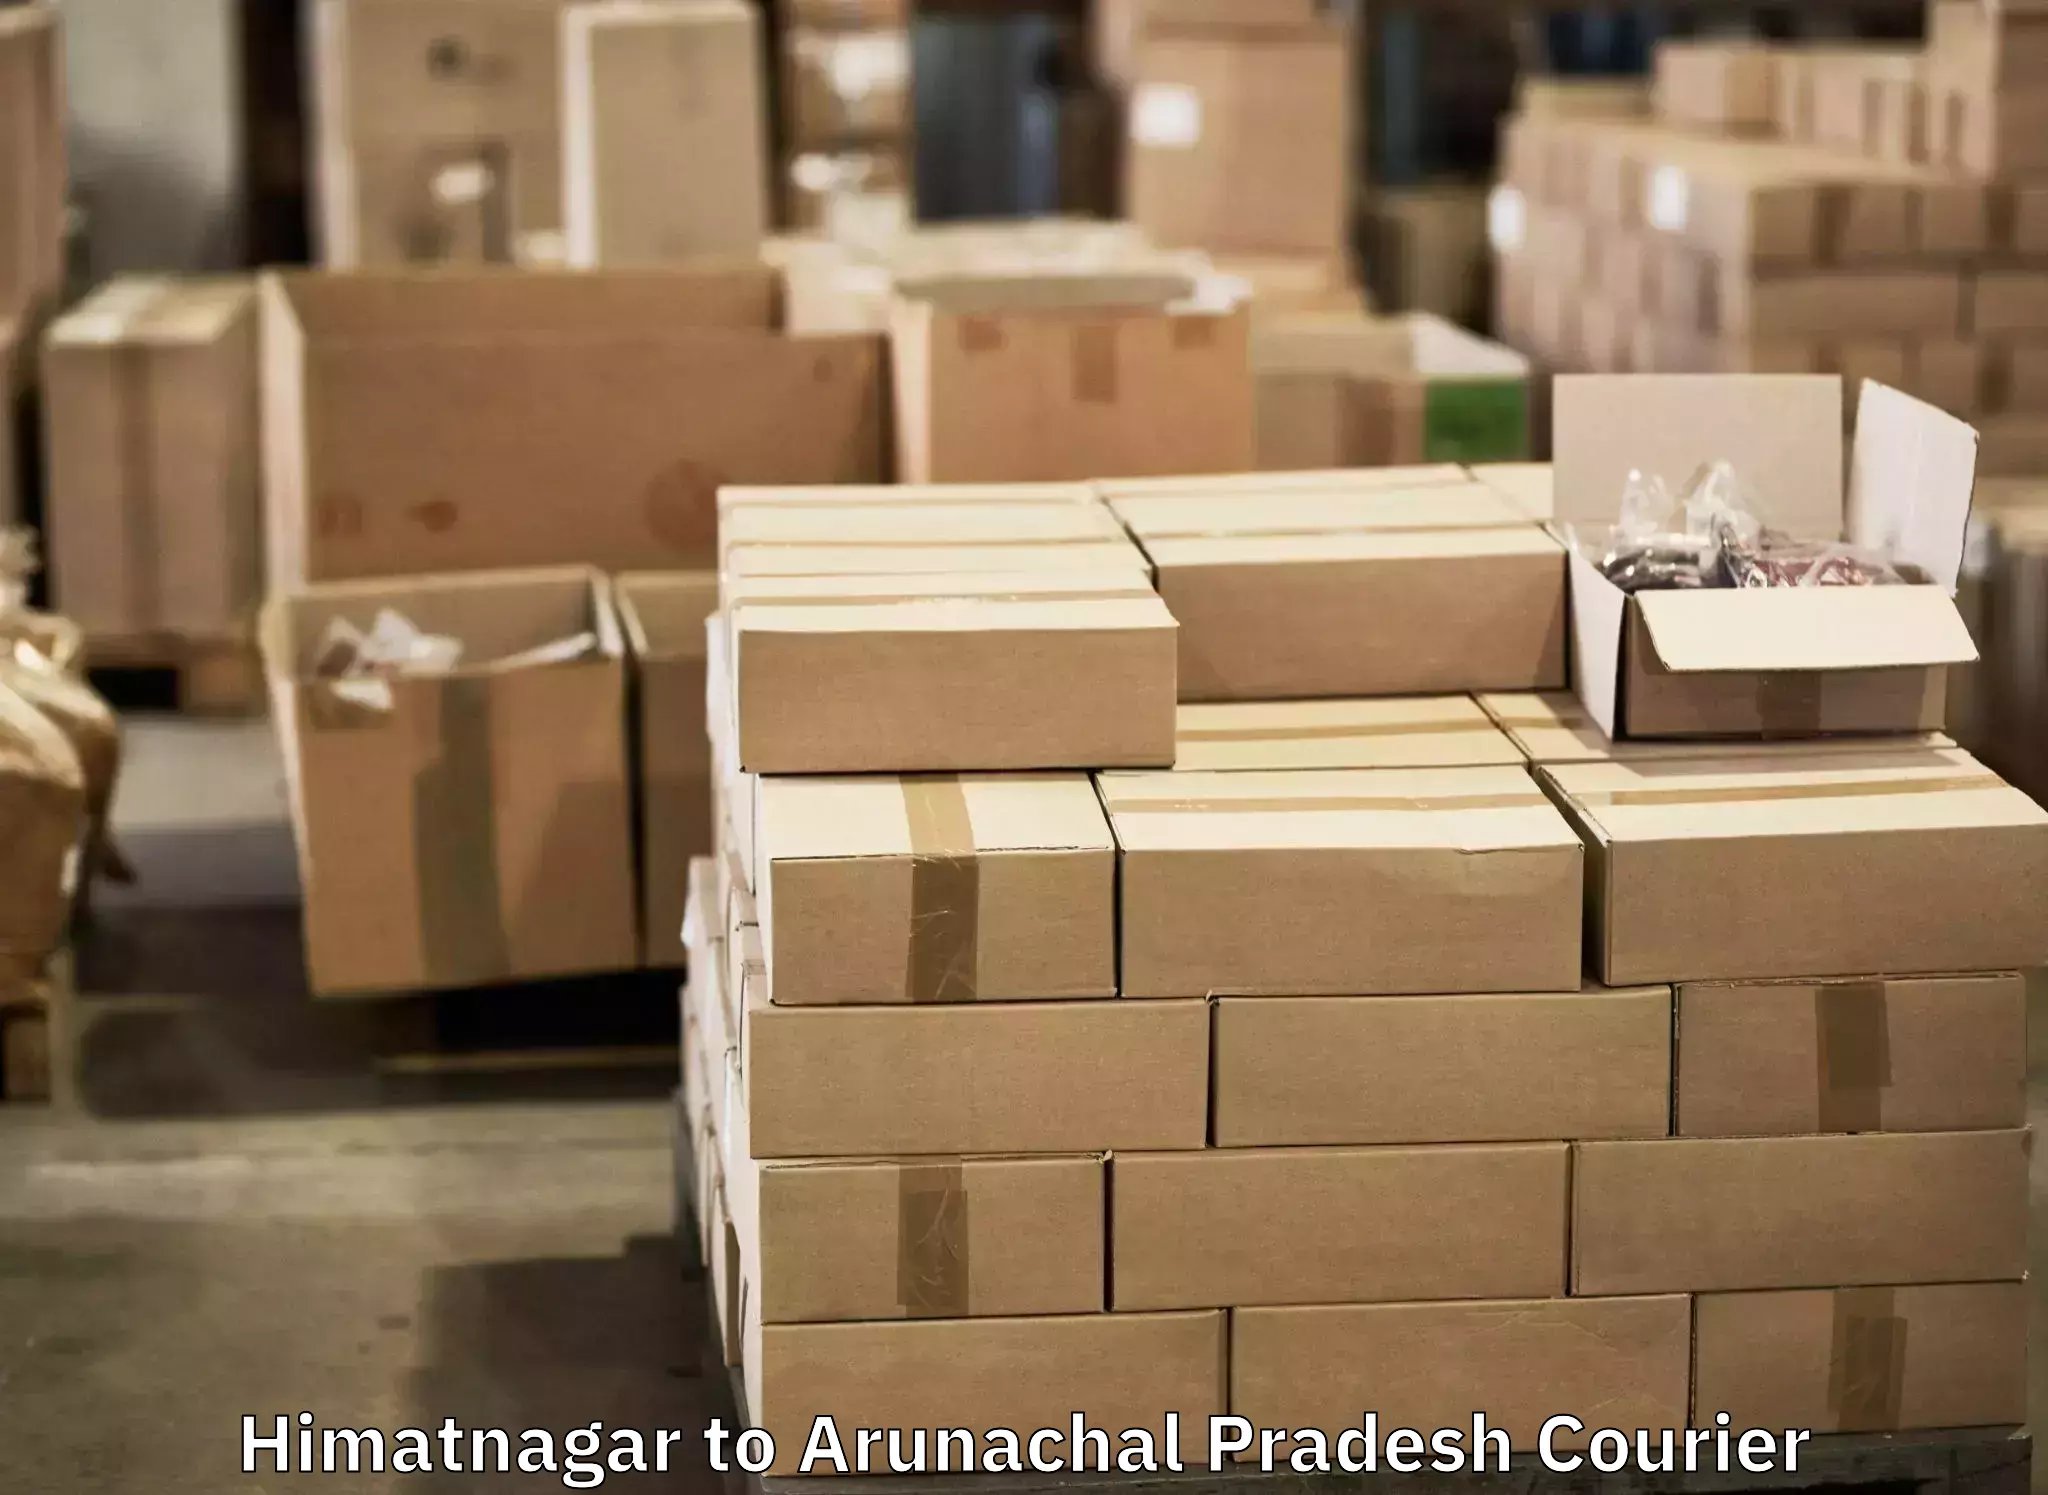 Express luggage delivery in Himatnagar to Namsai